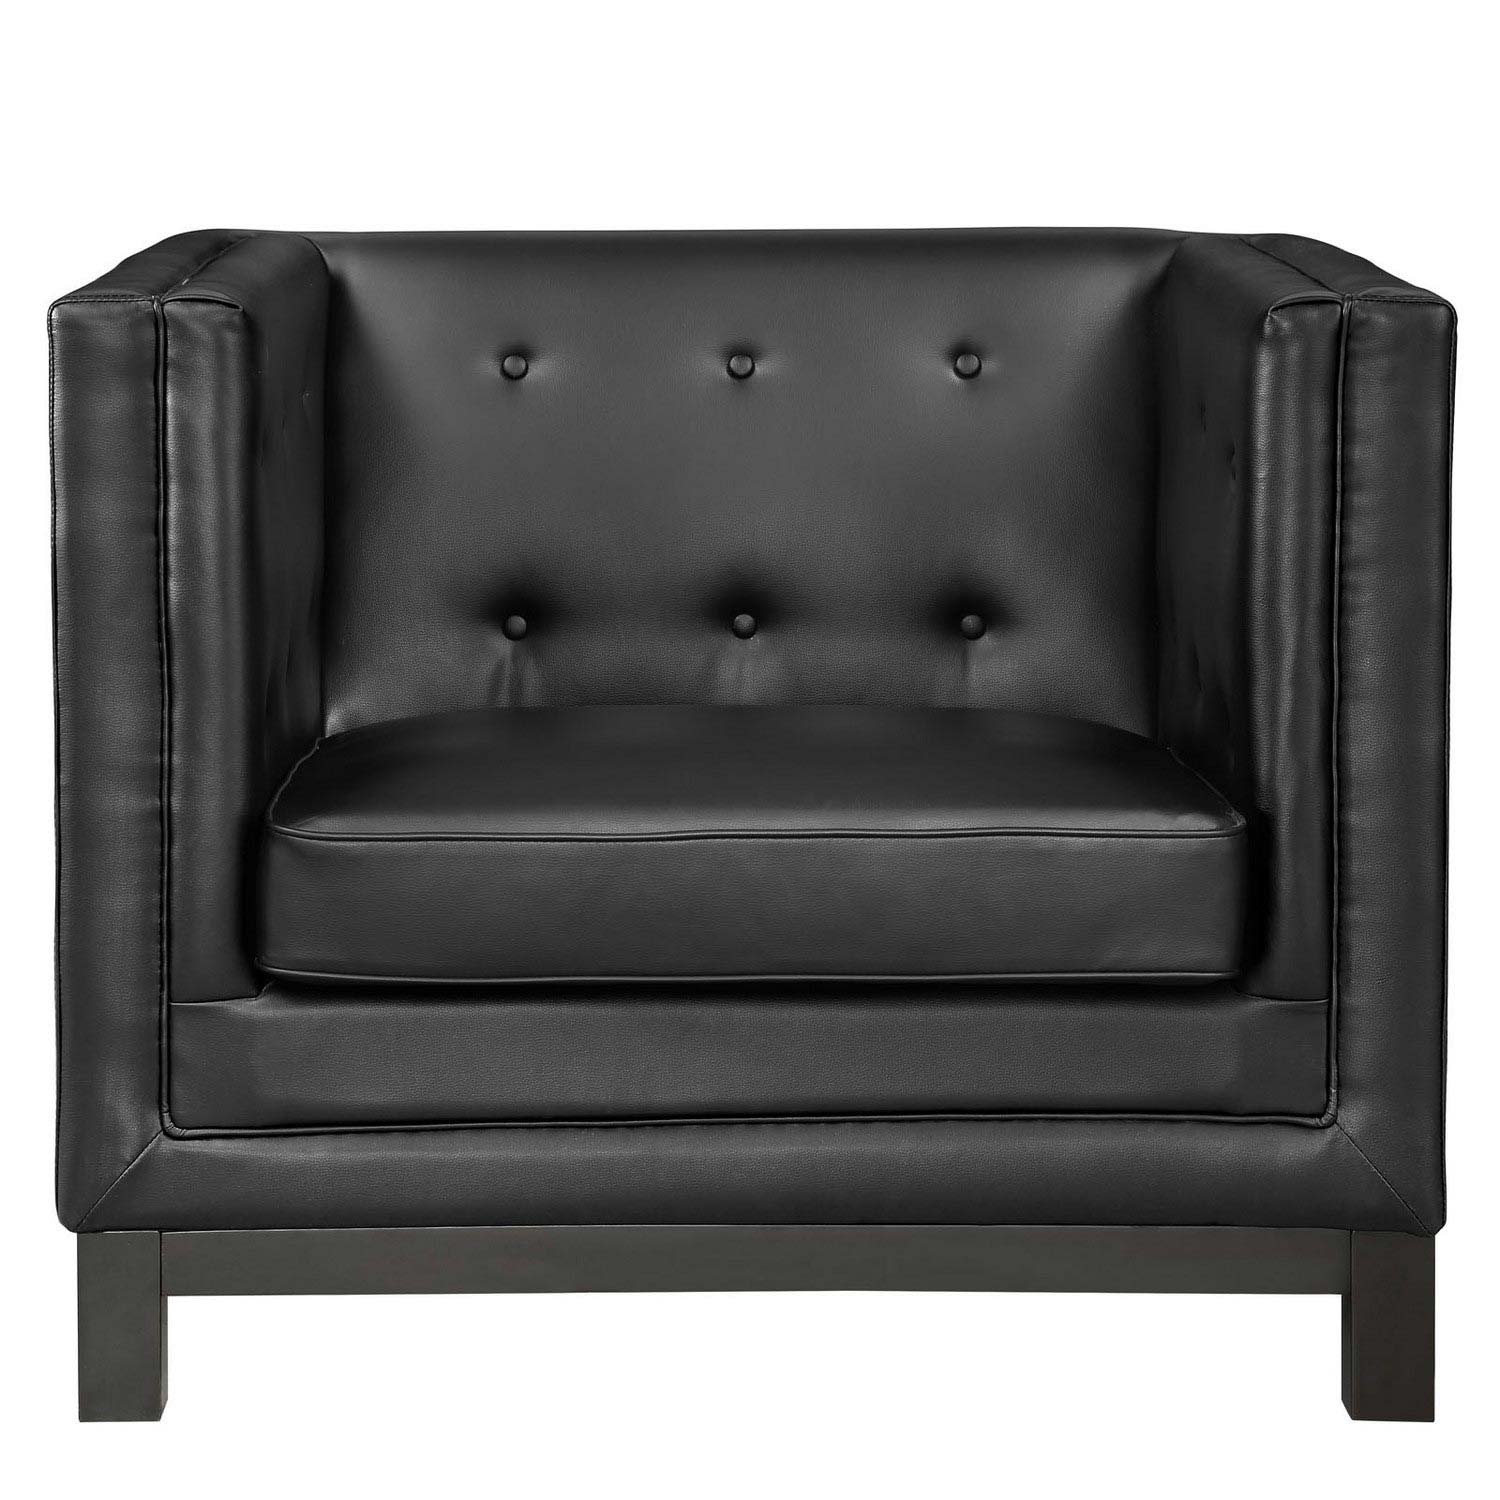 Modway Imperial 2 Piece Living Room Set - Black